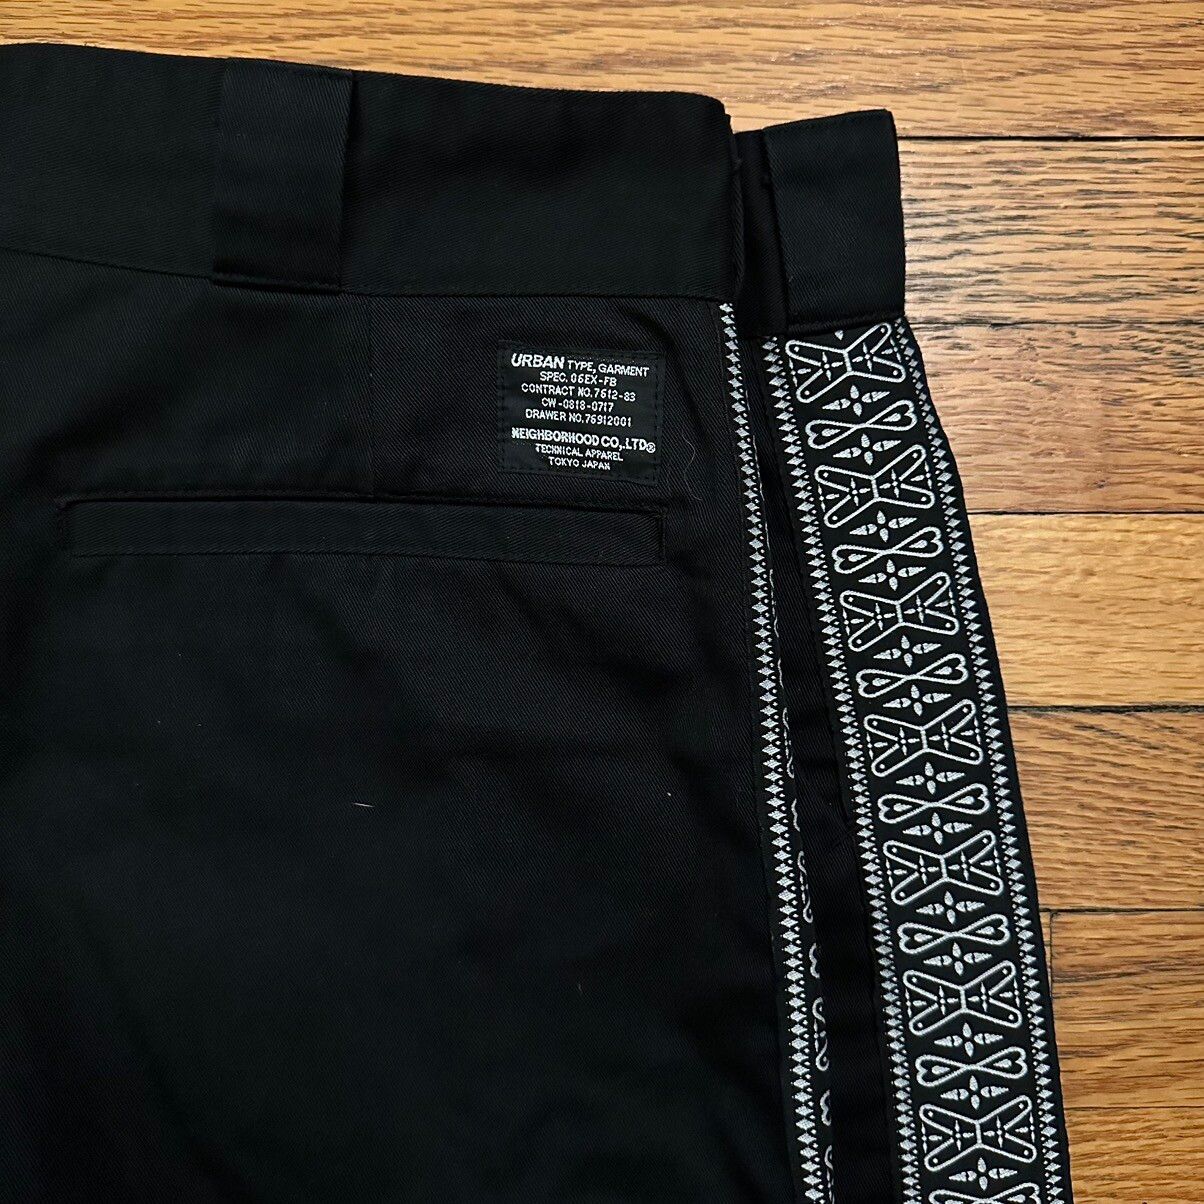 Neighborhood Neighborhood Japan Technical Apparel Black Chino Shorts Size US 36 / EU 52 - 3 Thumbnail